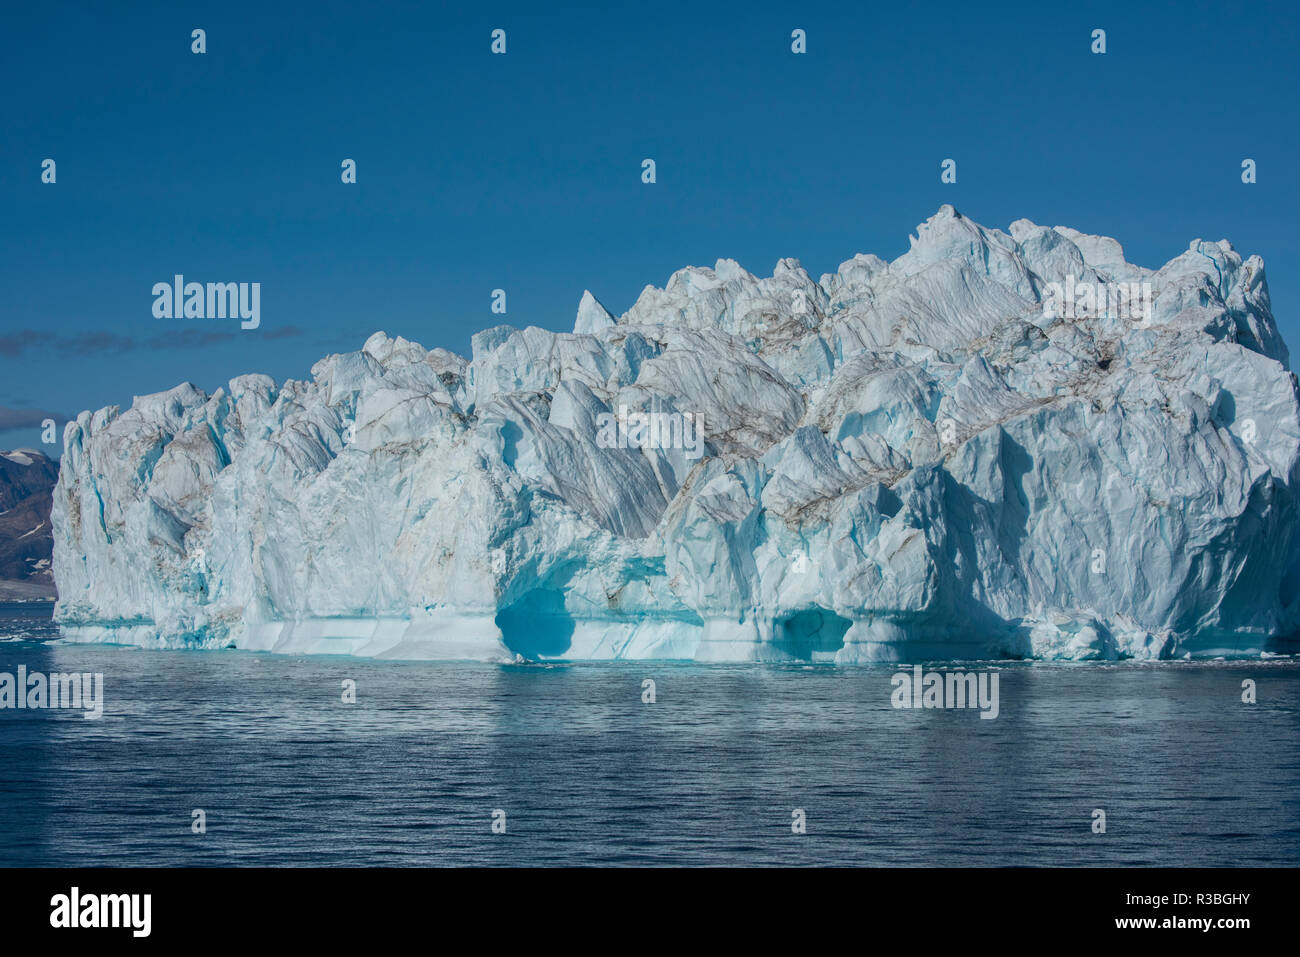 Le Groenland, Scoresbysund, aka Scoresby Sund, Nordvestfjord. Iceberg flottant dans l'immense fjord calme. Banque D'Images